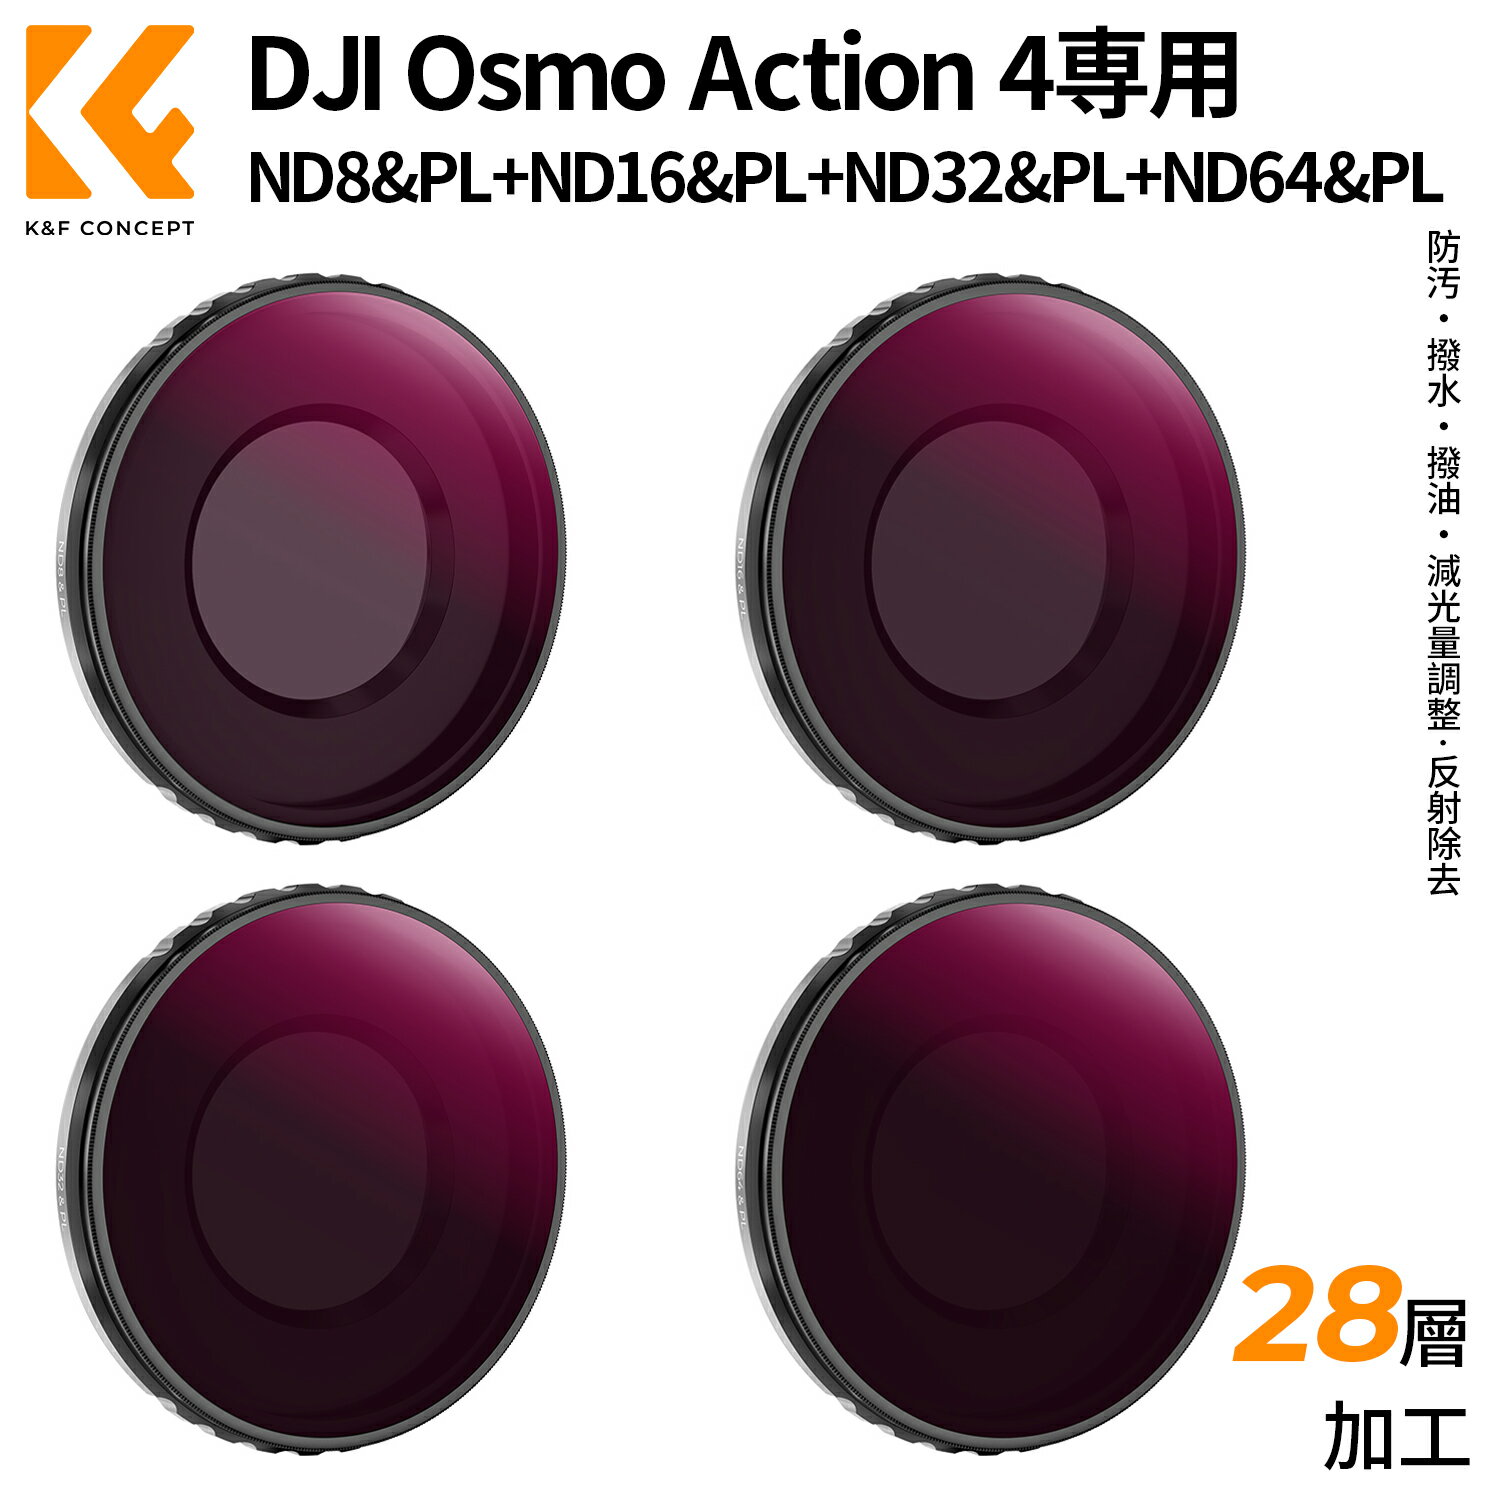 K&F Concept DJI Osmo Action 4専用フィルターキット ND8&PL+ND16&PL+ND32&PL+ND64&PL 1枚2役 減光量調整 反射除去 AGC光学ガラス 28層ナノコーティング 防水防汚